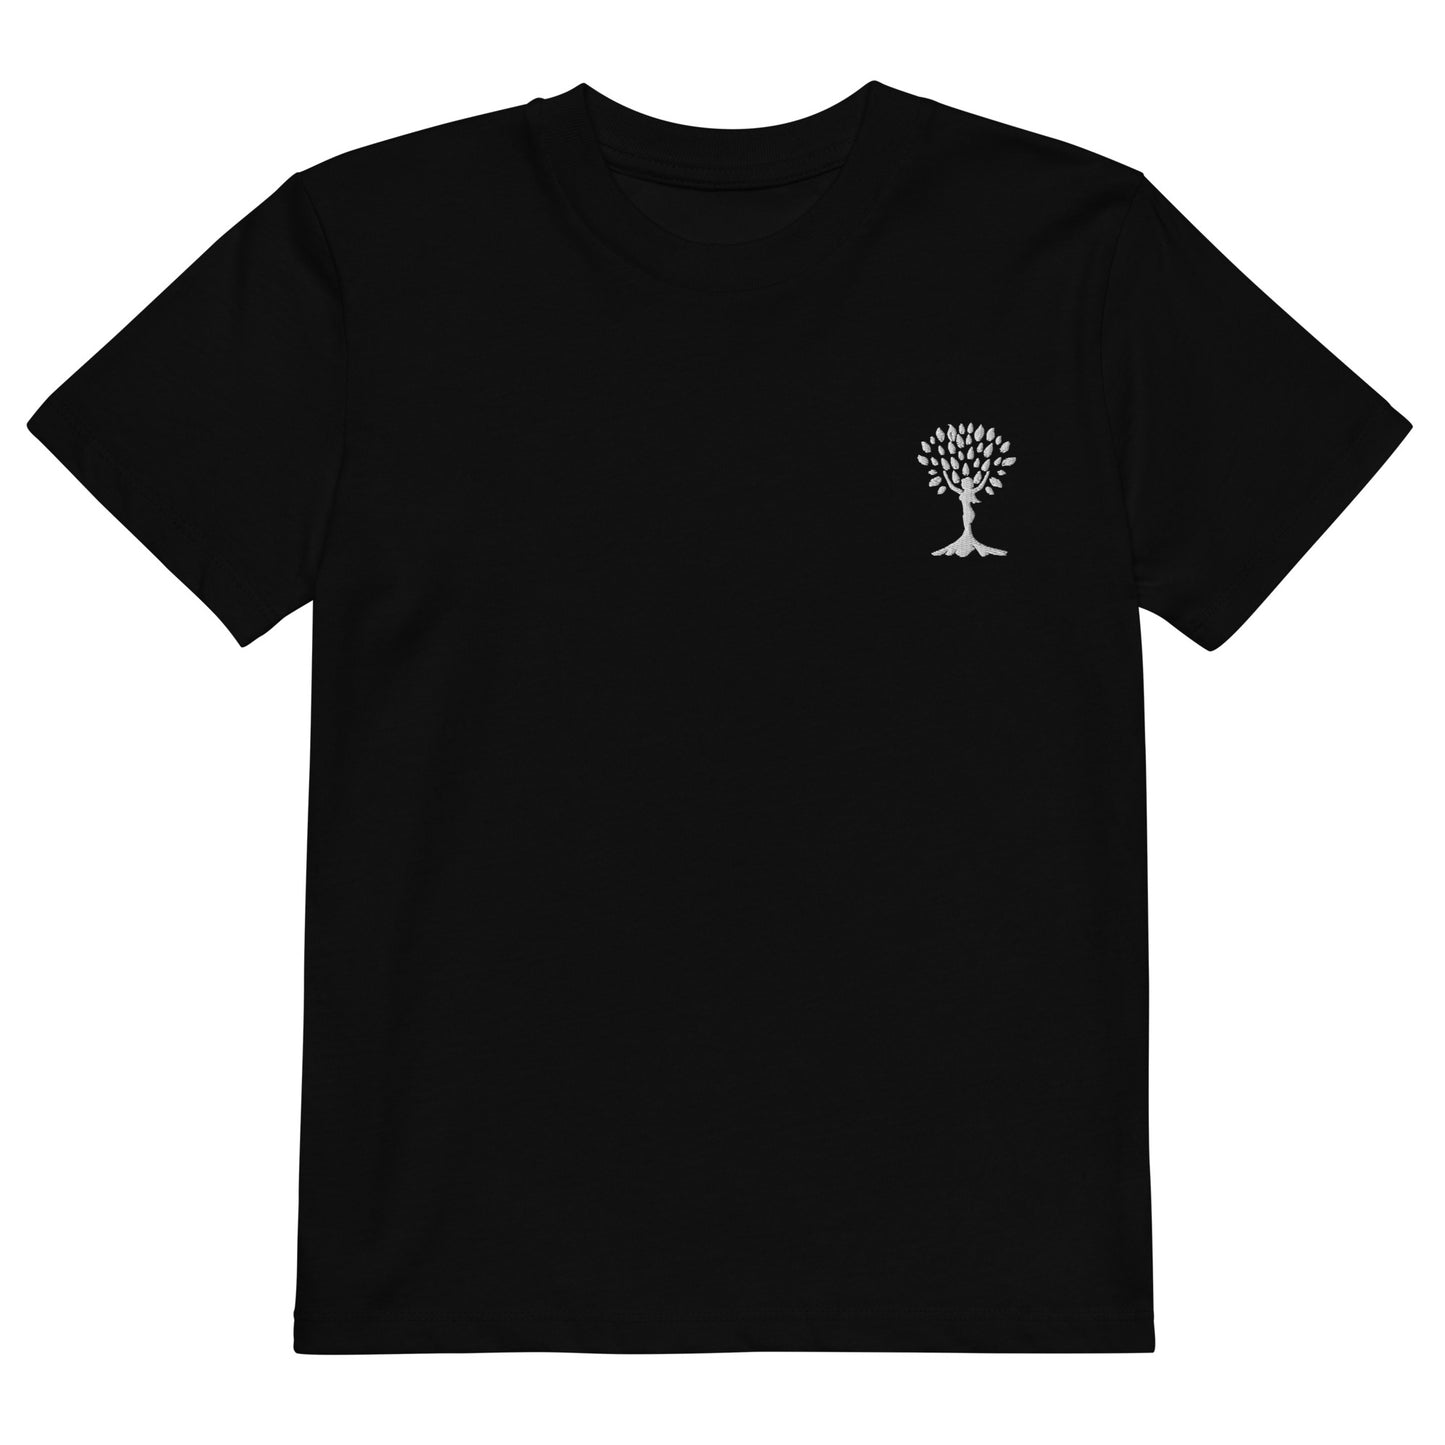 Kids Unisex black t-shirt